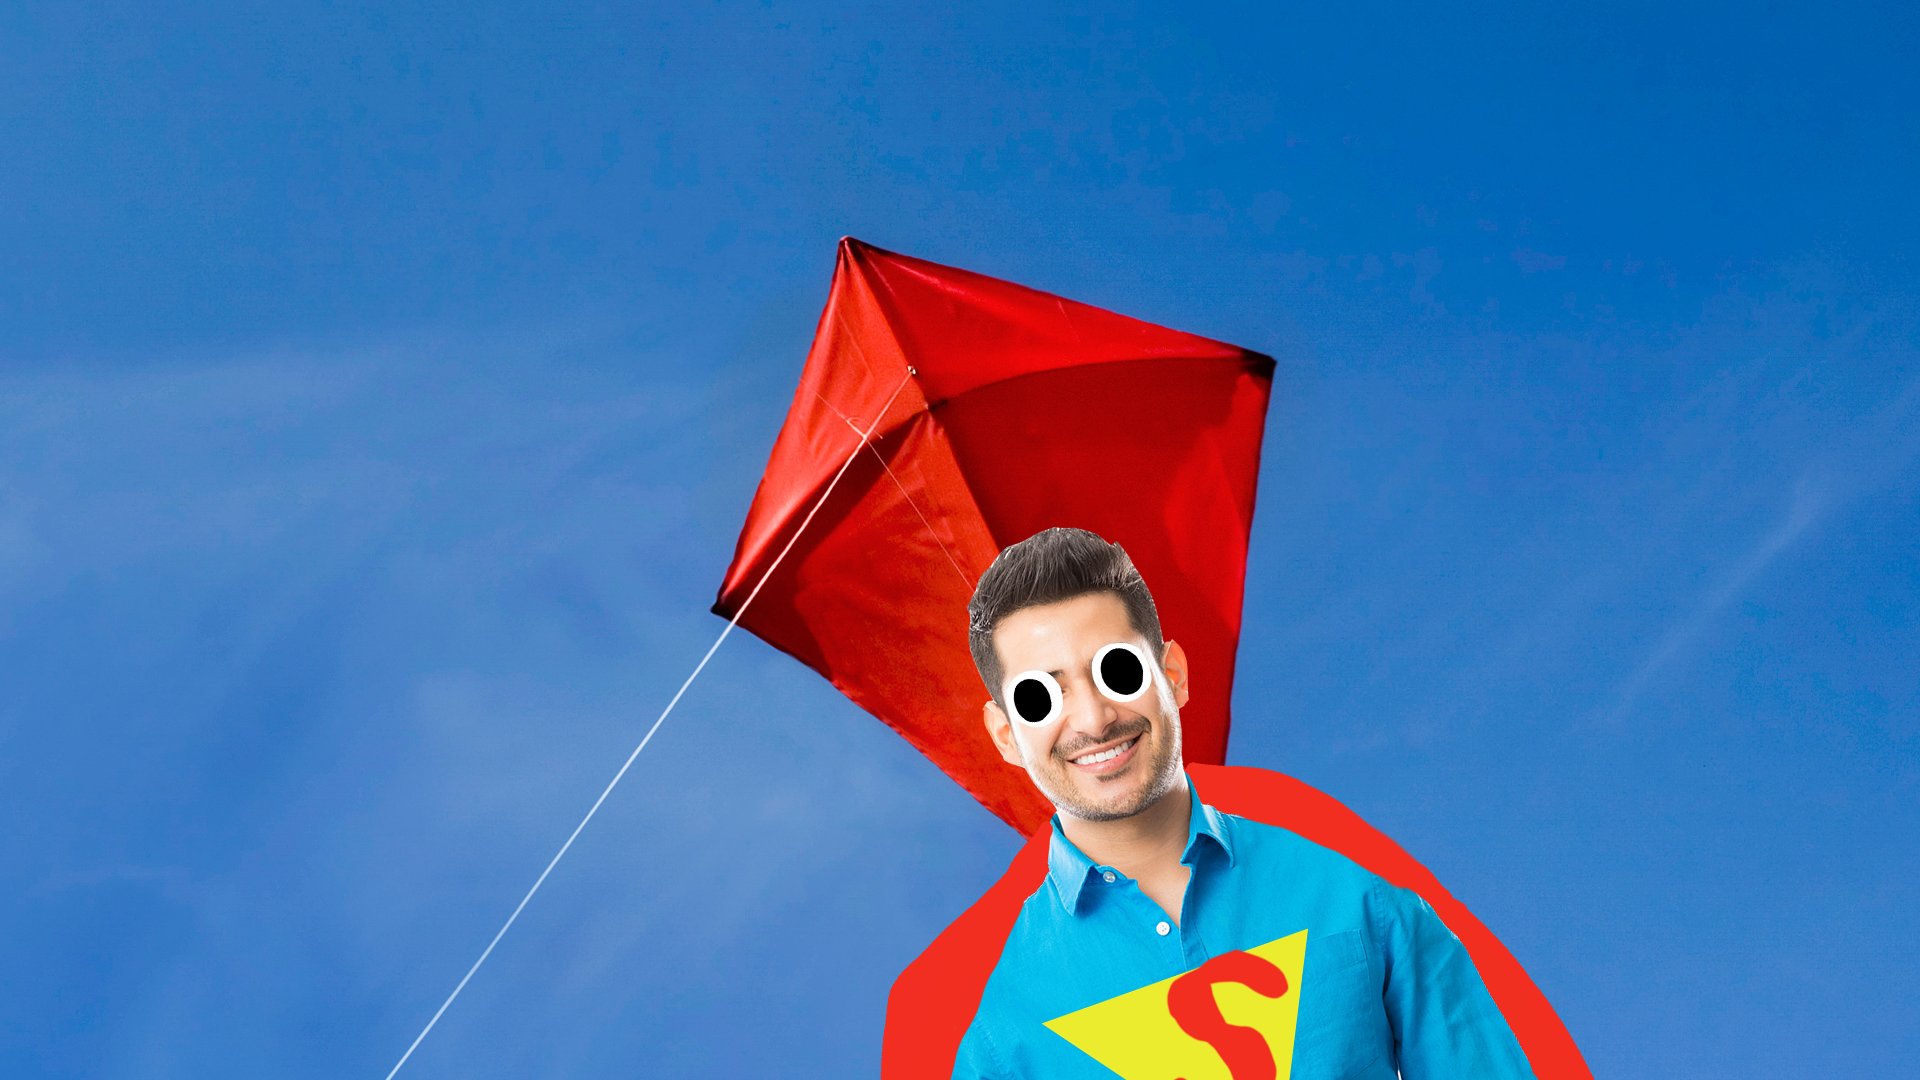 A goofy superhero with a kite